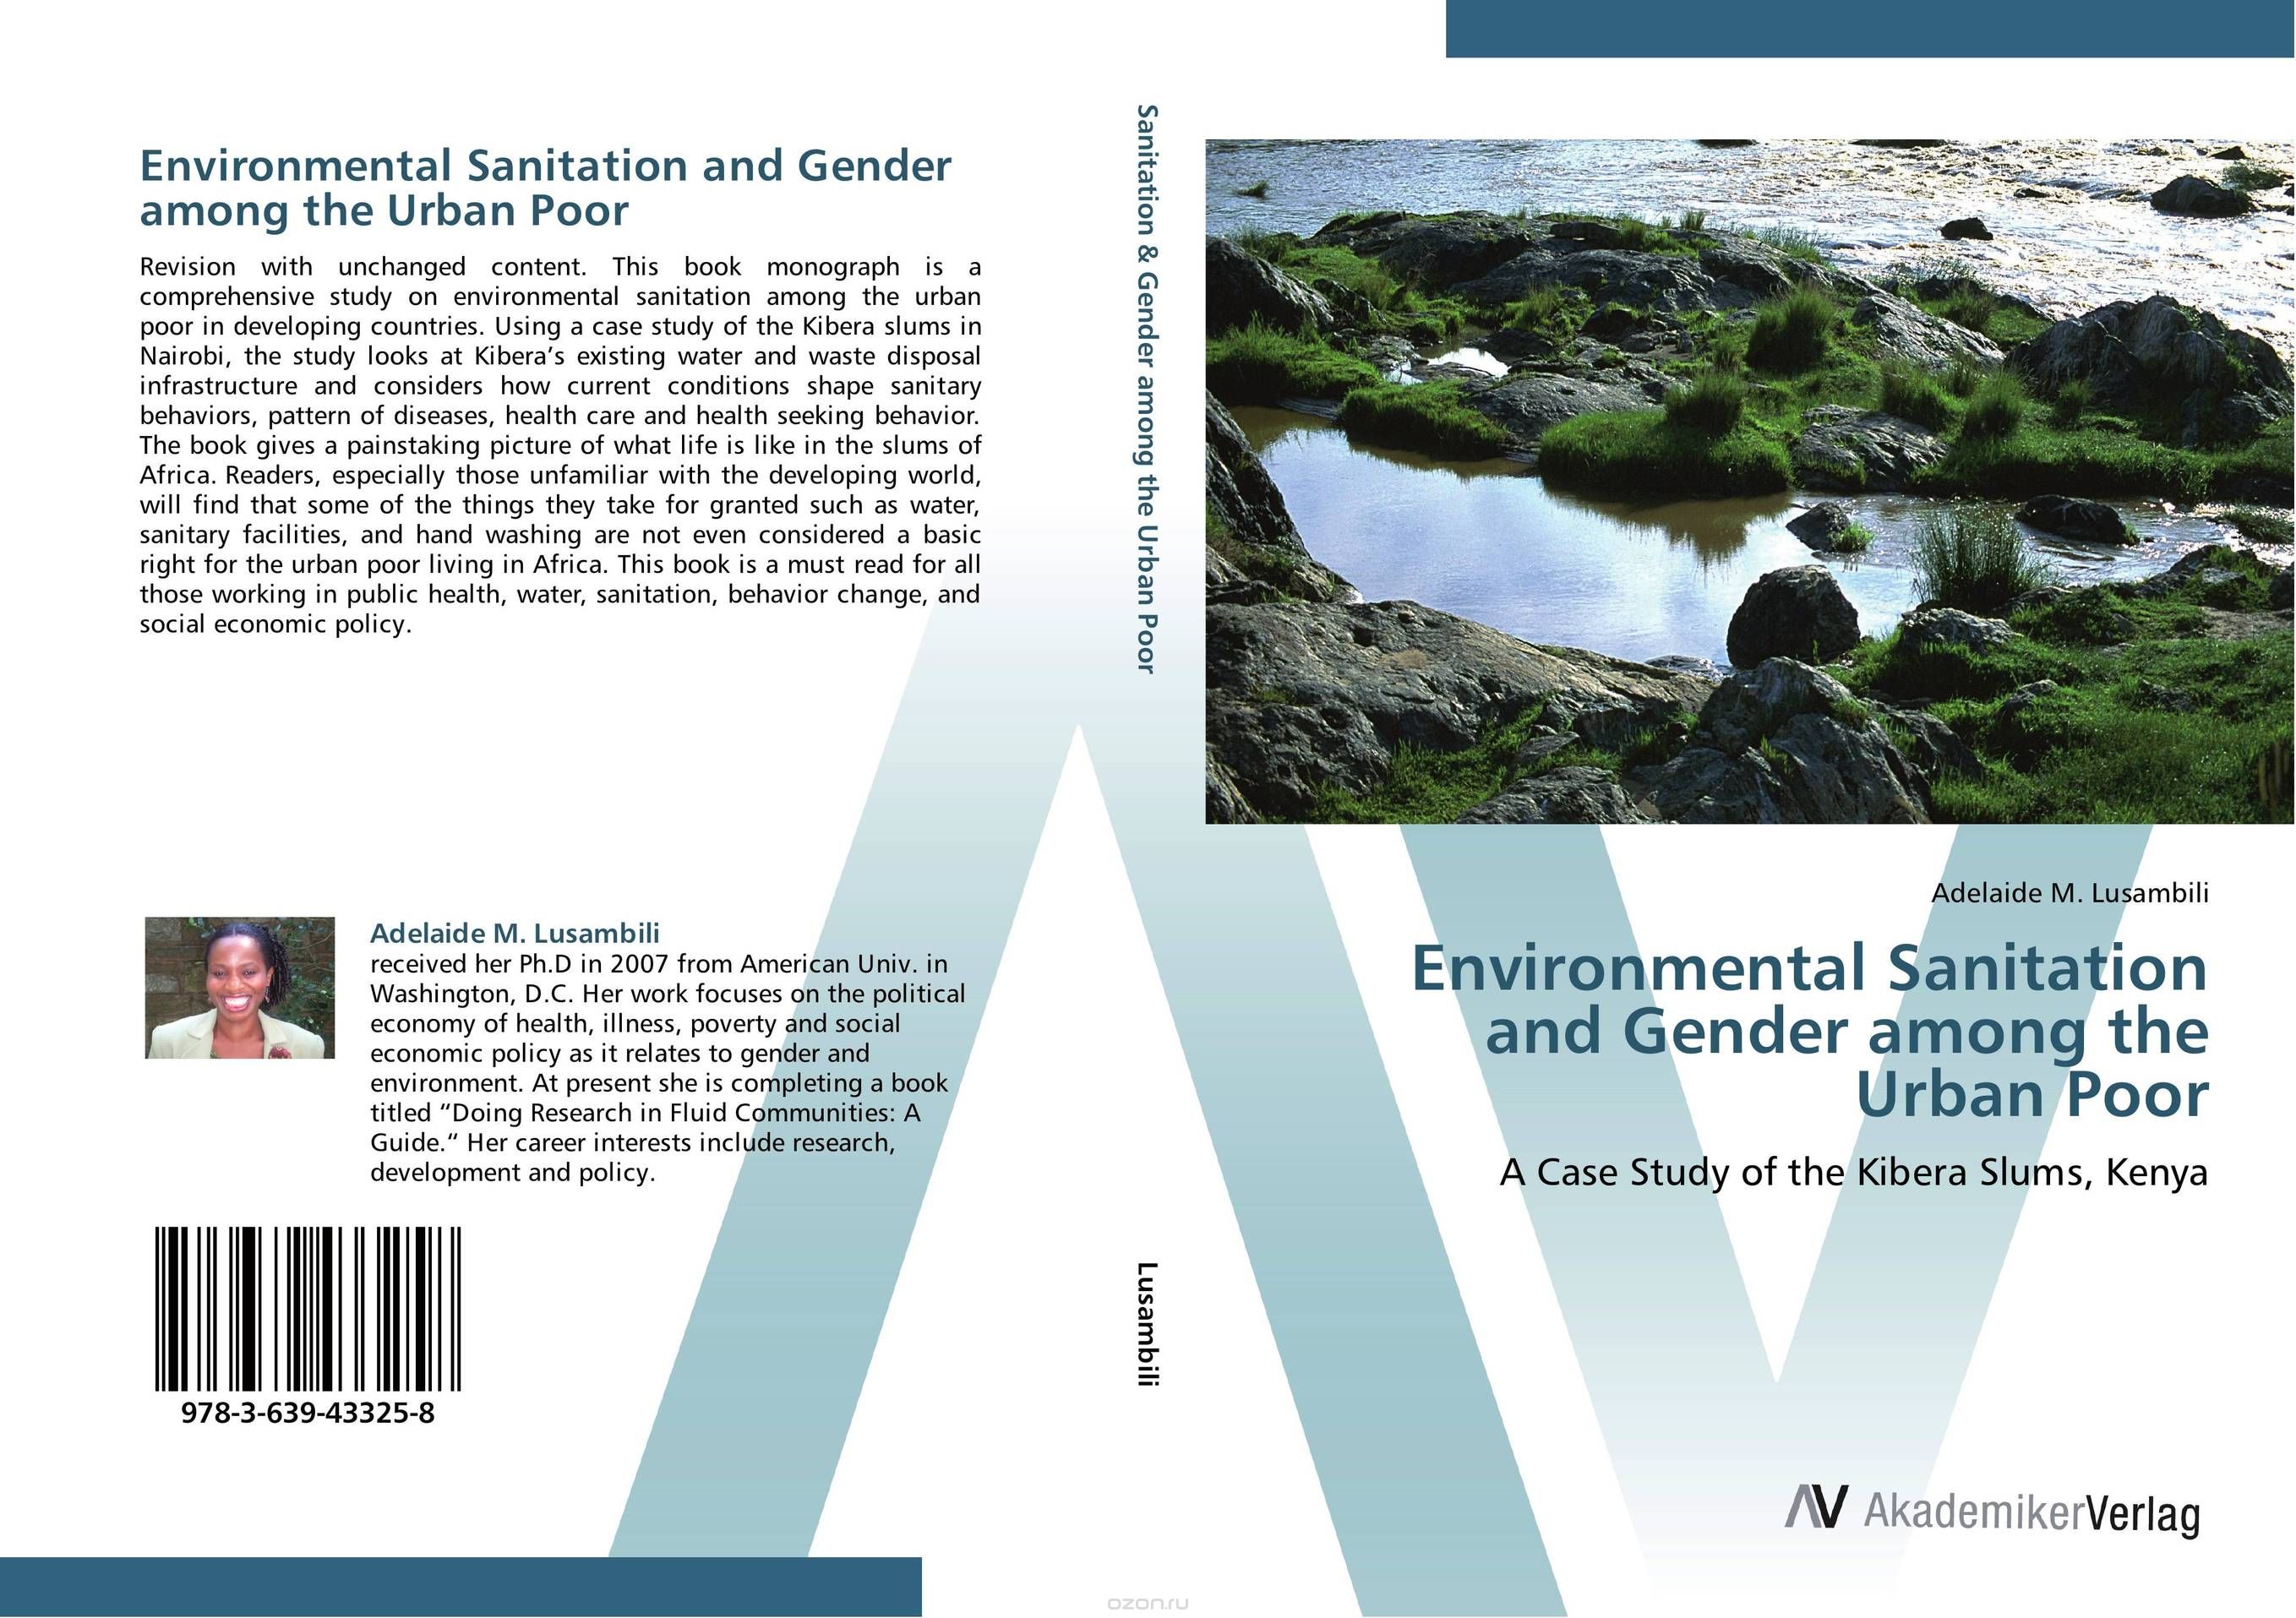 Скачать книгу "Environmental Sanitation and Gender among the Urban Poor"